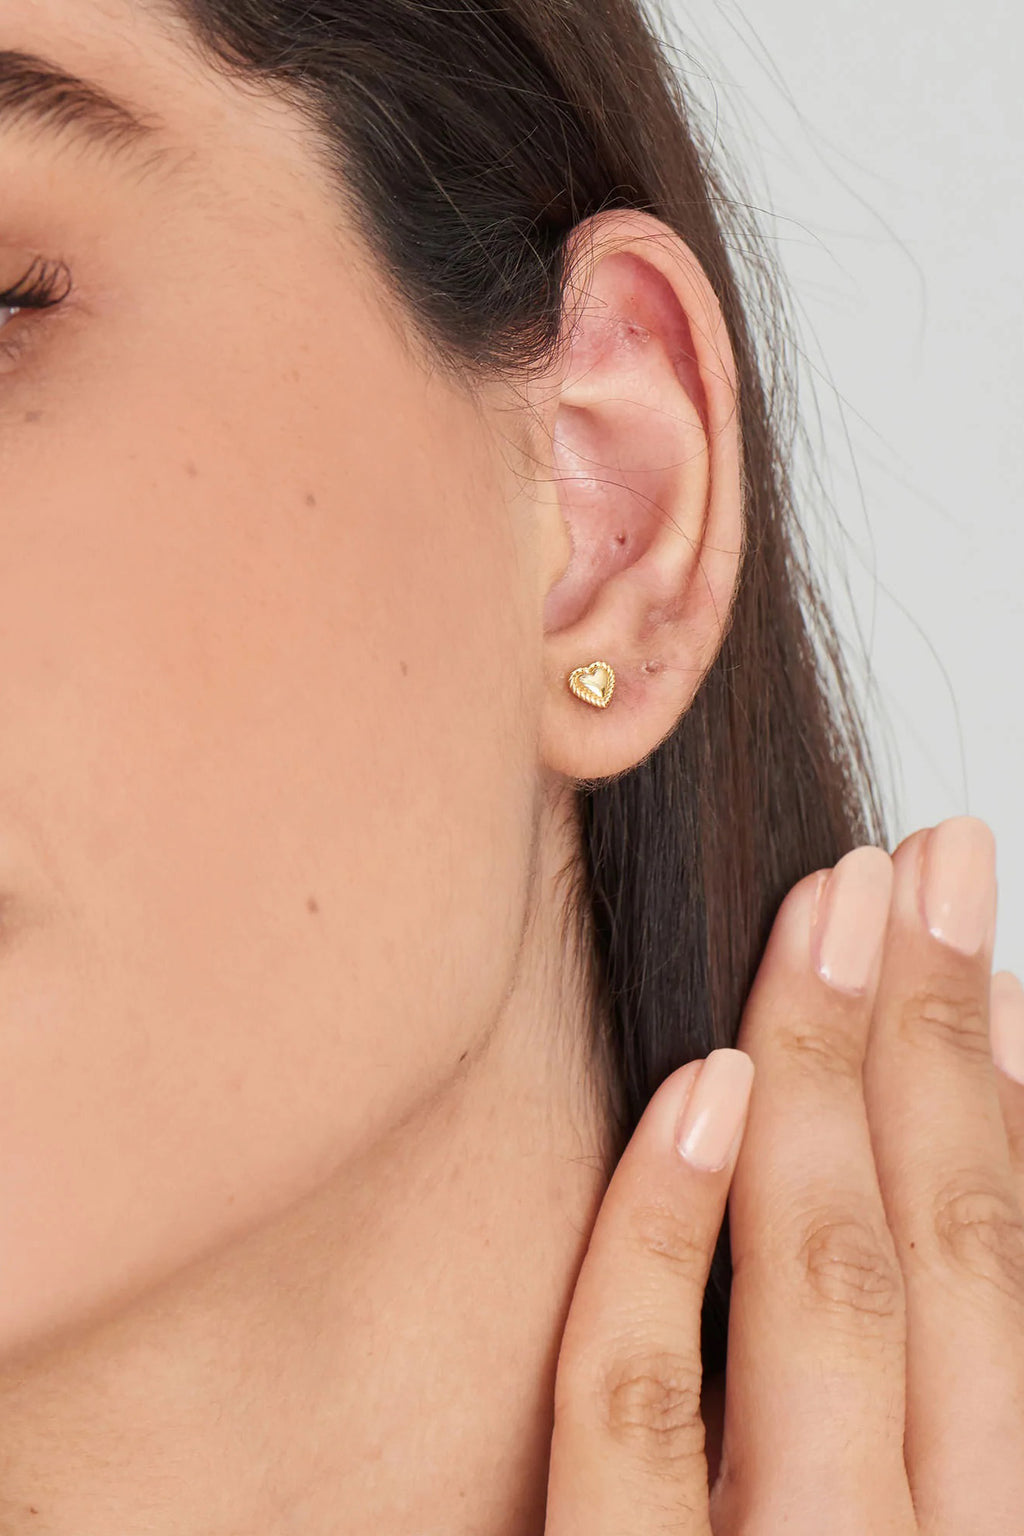 AW22 Ania Haie Gold Rope Heart Stud Earrings - The Mercantile London